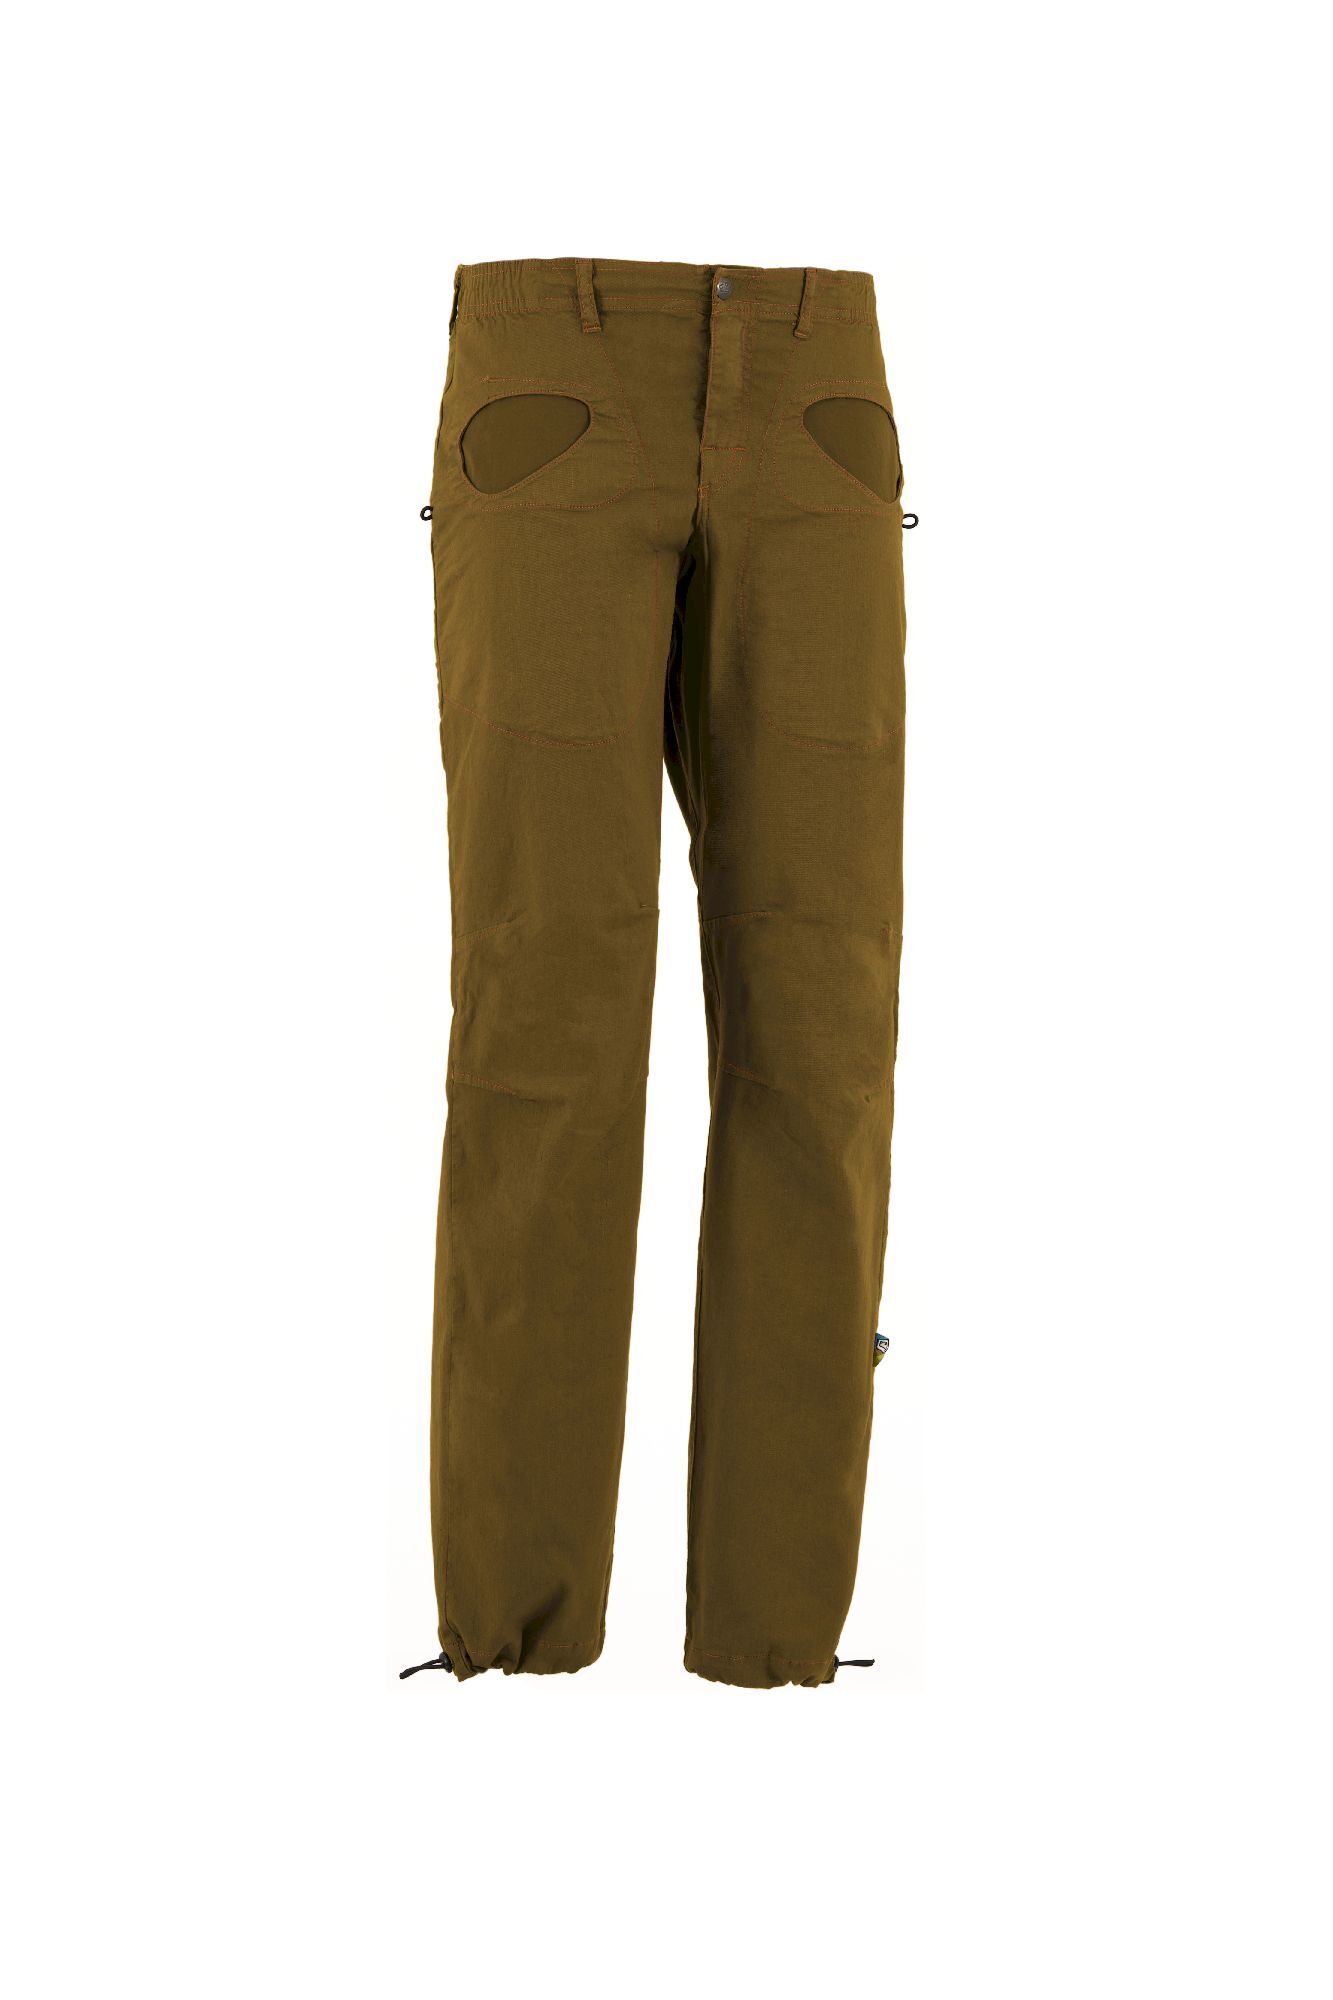 E9 Rondo Flax 2 - Climbing trousers - Men's